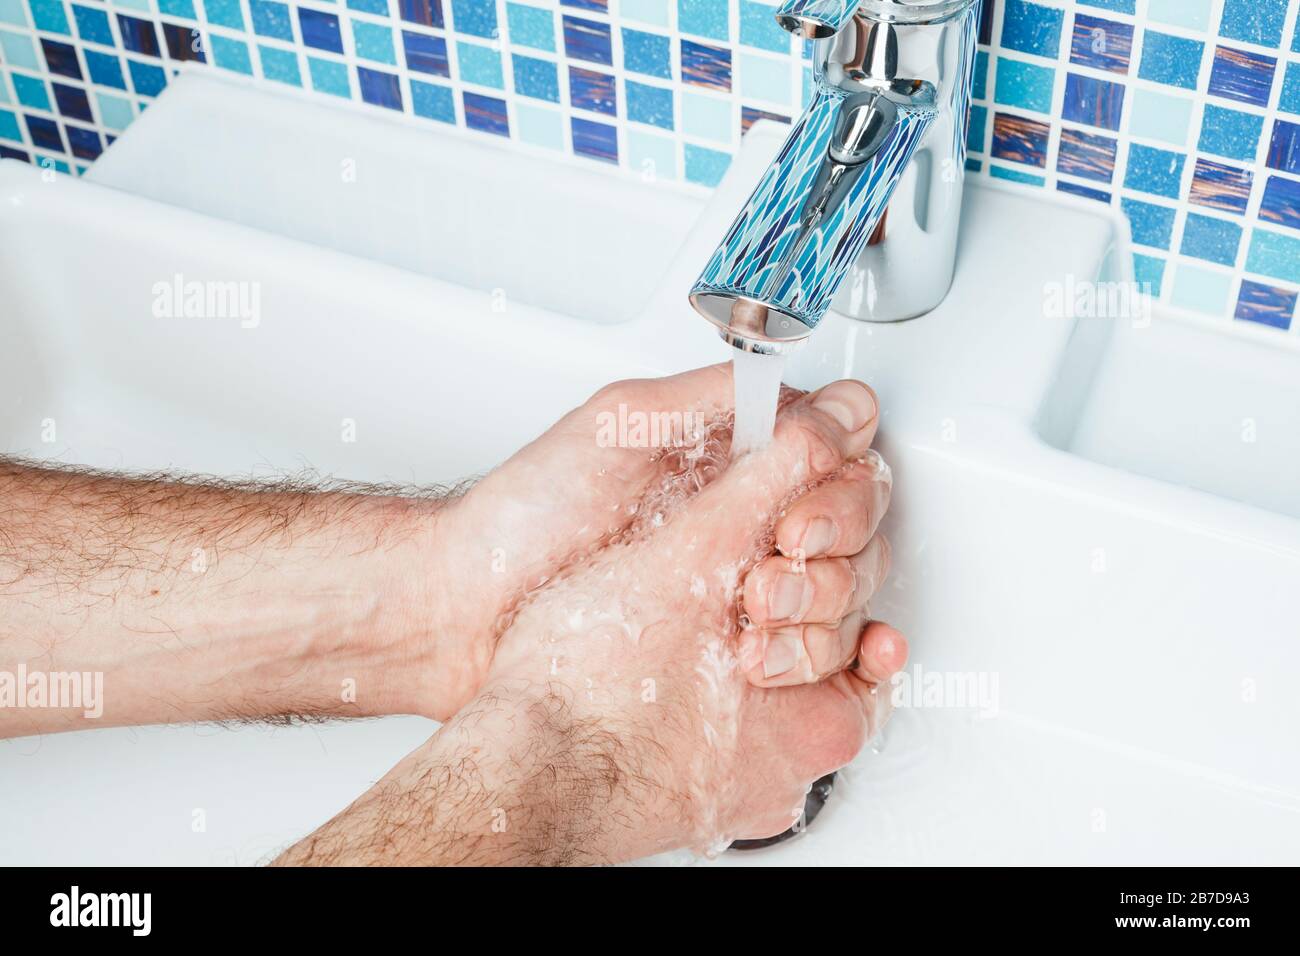 Man washing hands performing basic protective measures against spreading of coronavirus epidemy Stock Photo